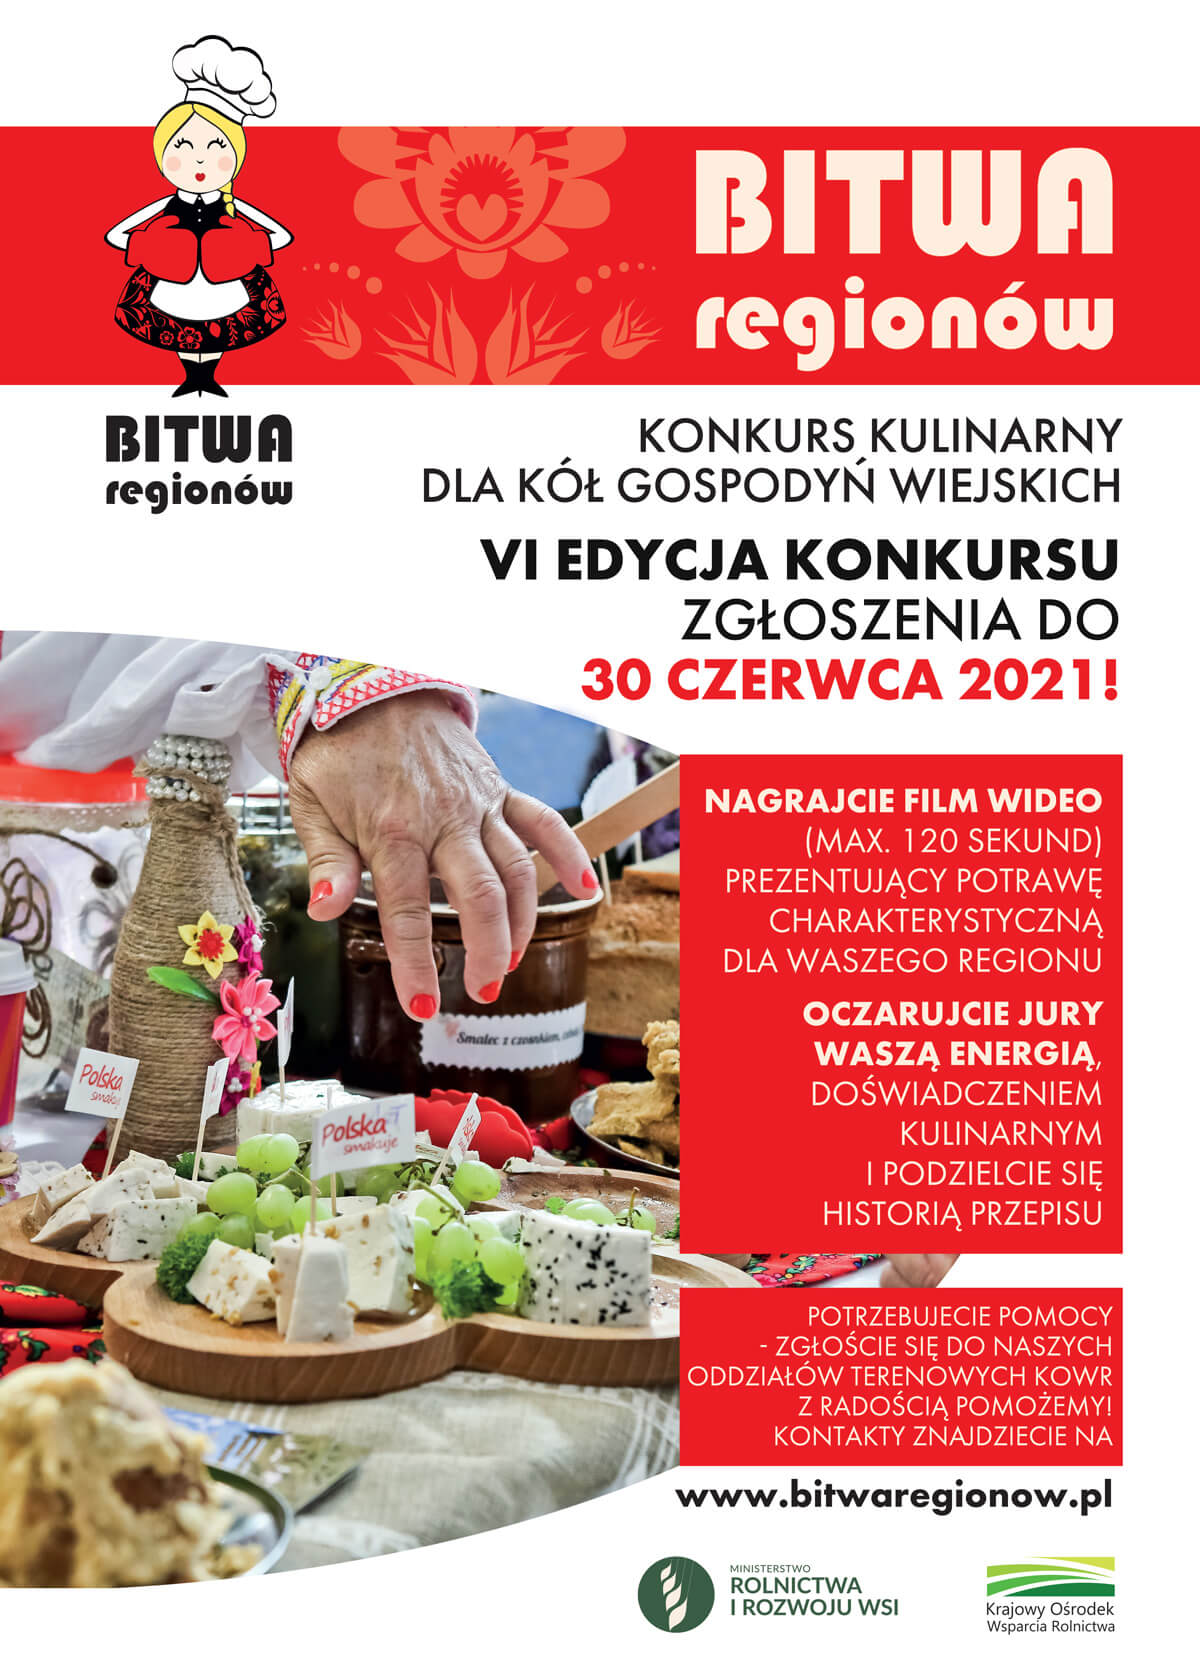 Bitwa regionów - konkurs kulinarny